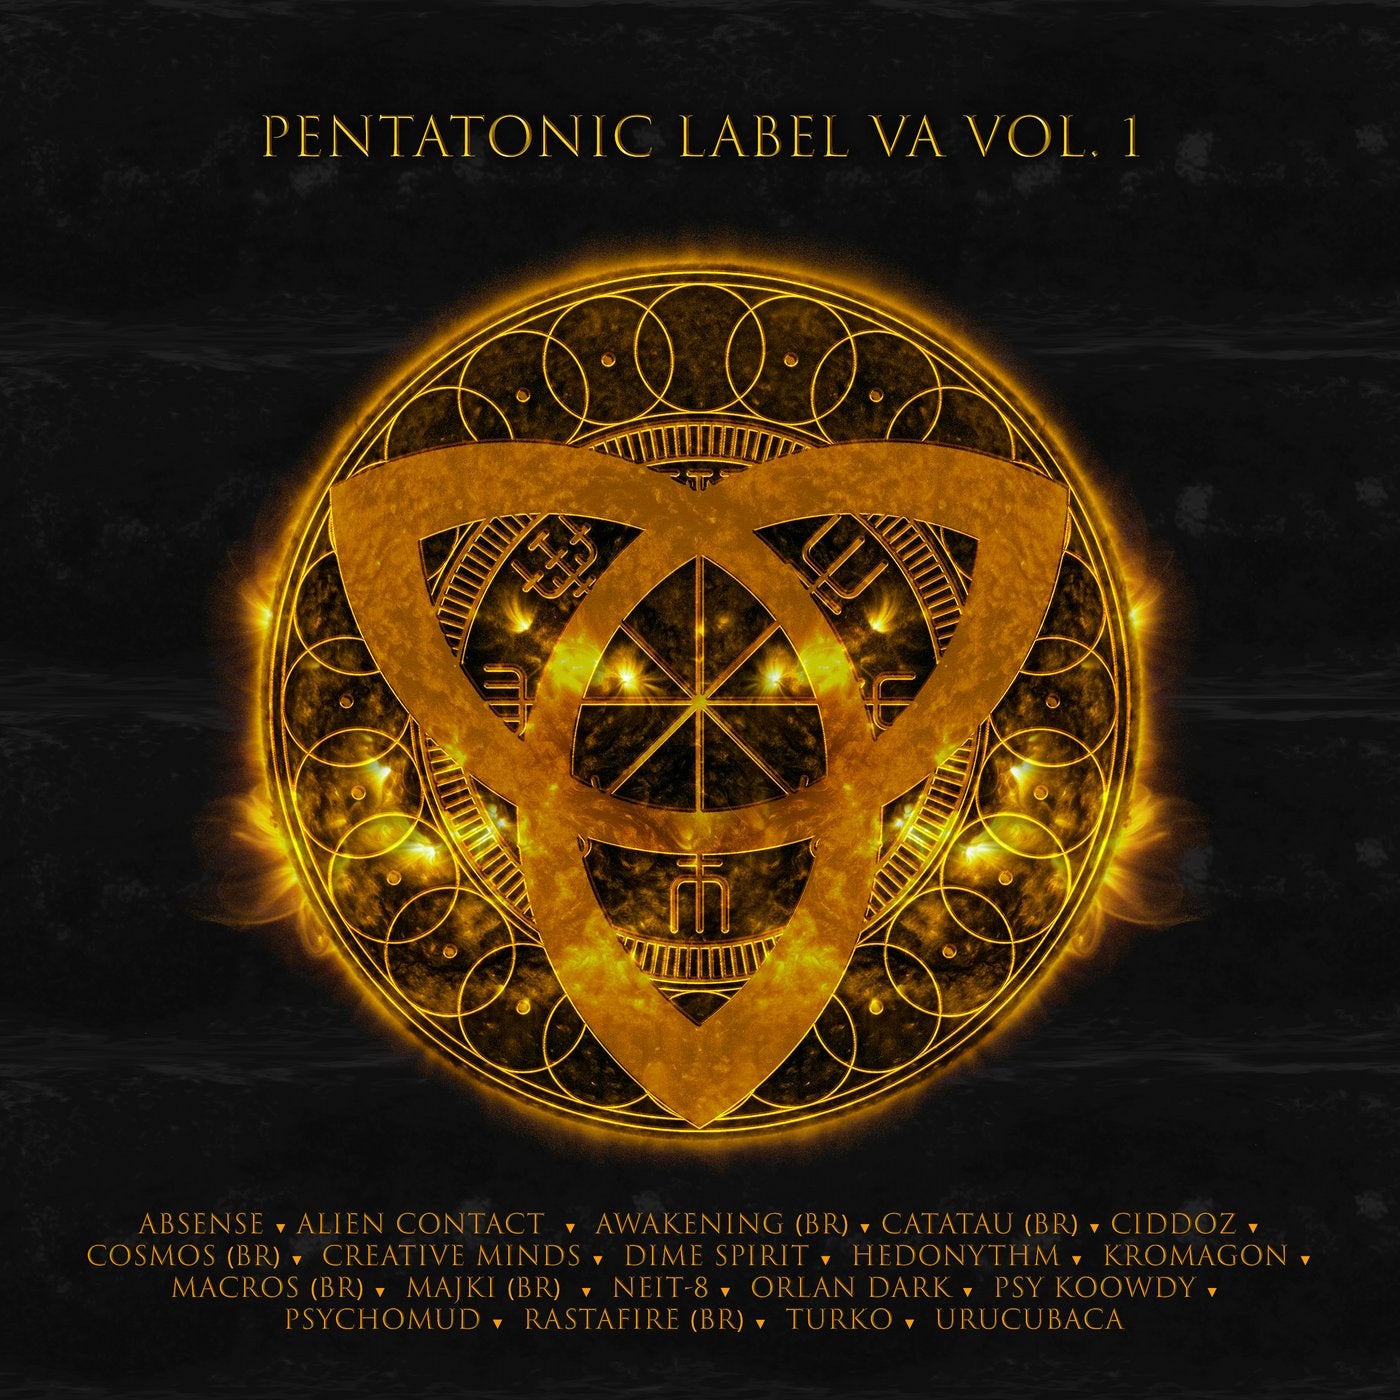 Pentatonic Label V/A Vol. 1